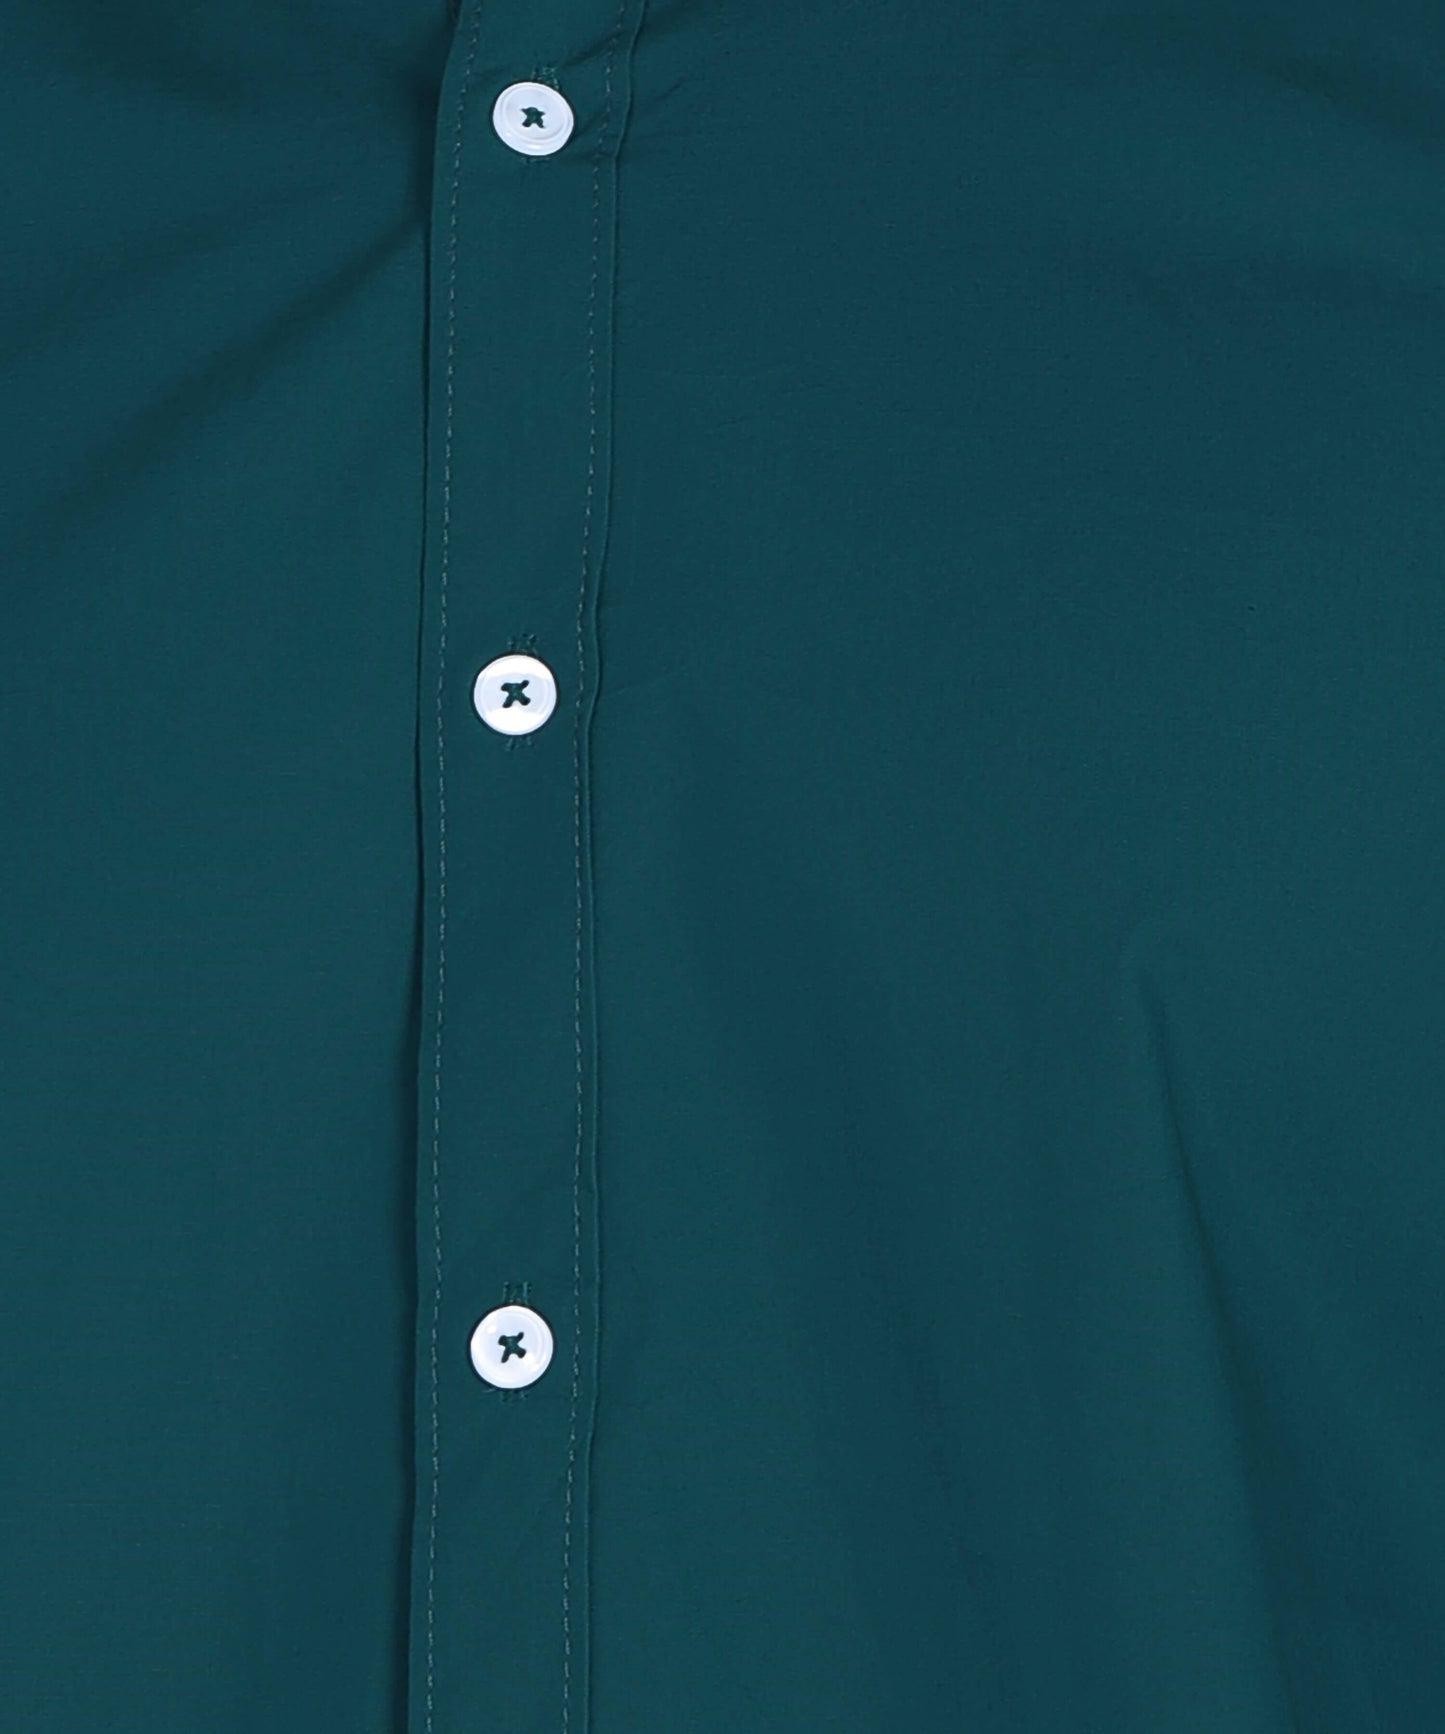 5thanfold Men's Casual Pekok Green Full Sleeve Pure Cotton Mandarin Collar Shirt (No Pocket)